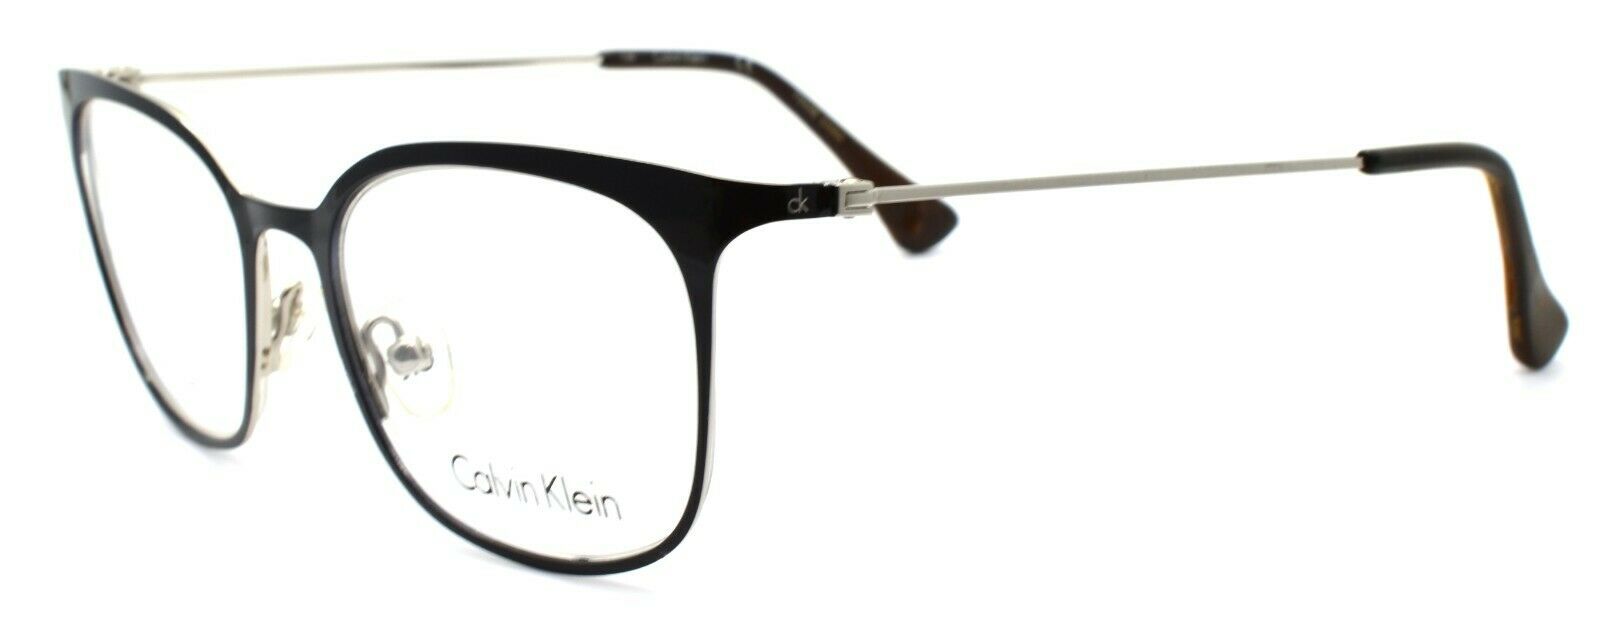 1-Calvin Klein CK5432 001 Eyeglasses Frames PETITE 47-17-135 Black-750779100912-IKSpecs